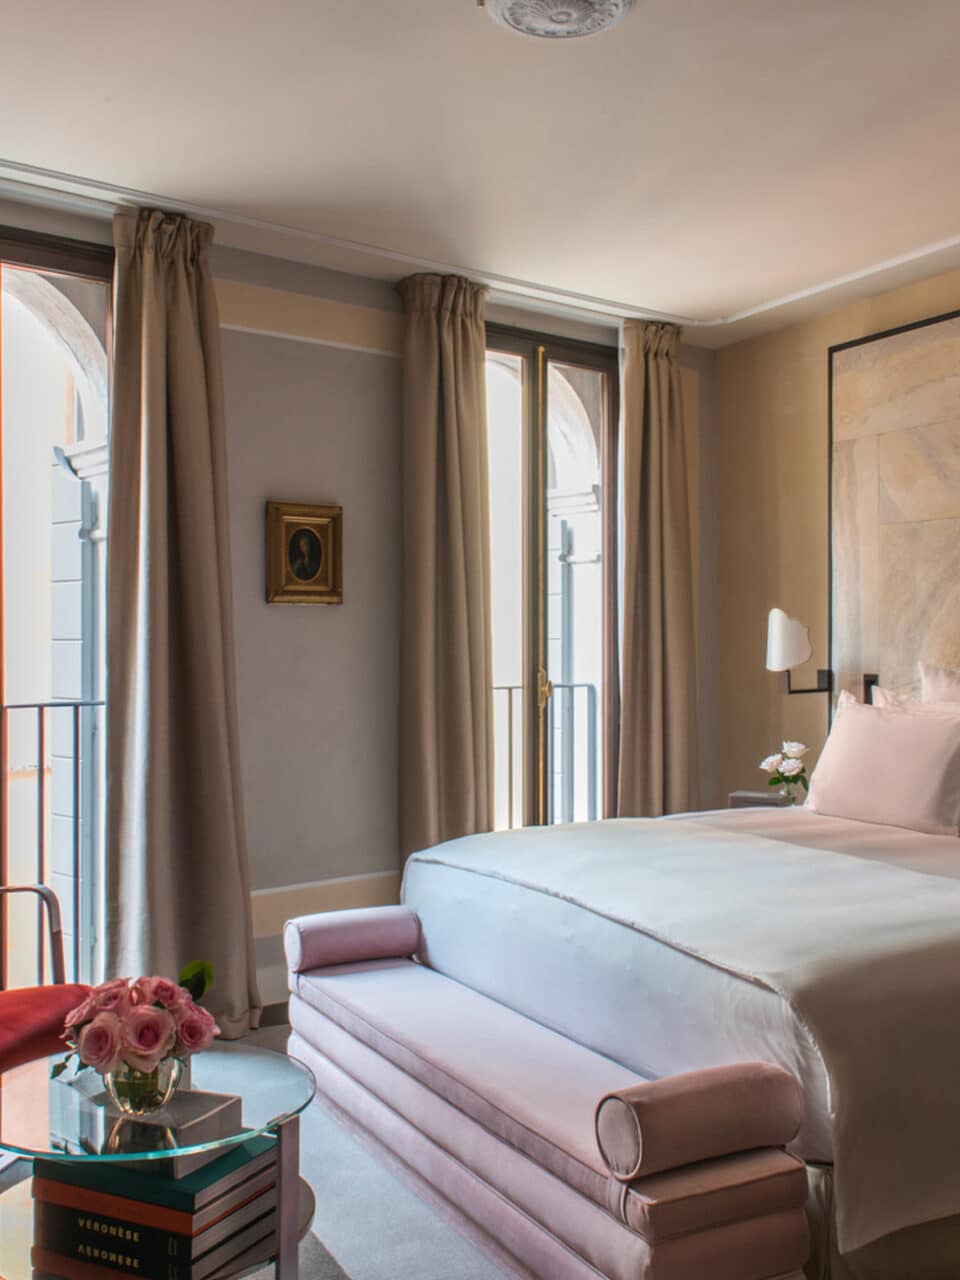 08 Chambre deluxe Nolinski Venise hotel luxe venise 1 1